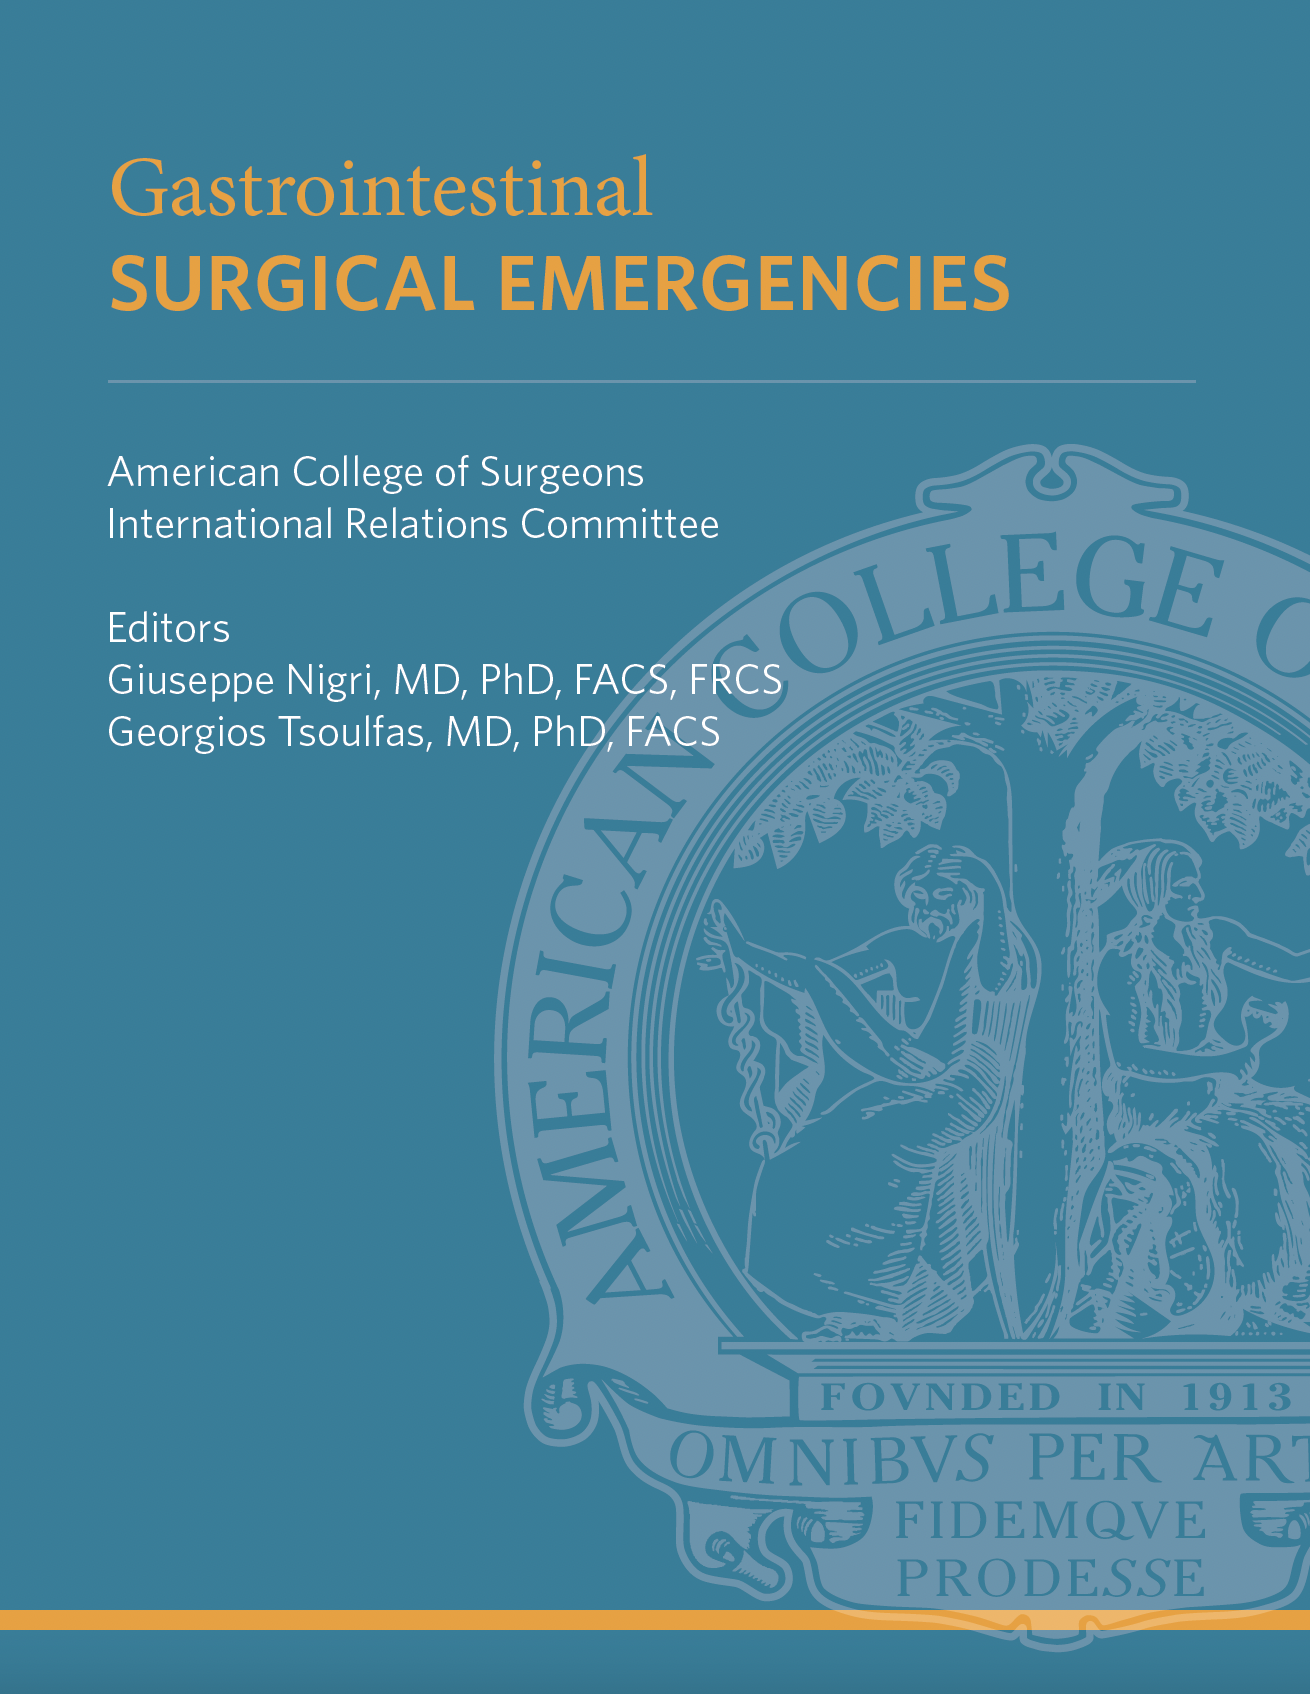 Giuseppe Nigri, George Tsoulfas, ACS Gastrointestinal Surgical Emergencies